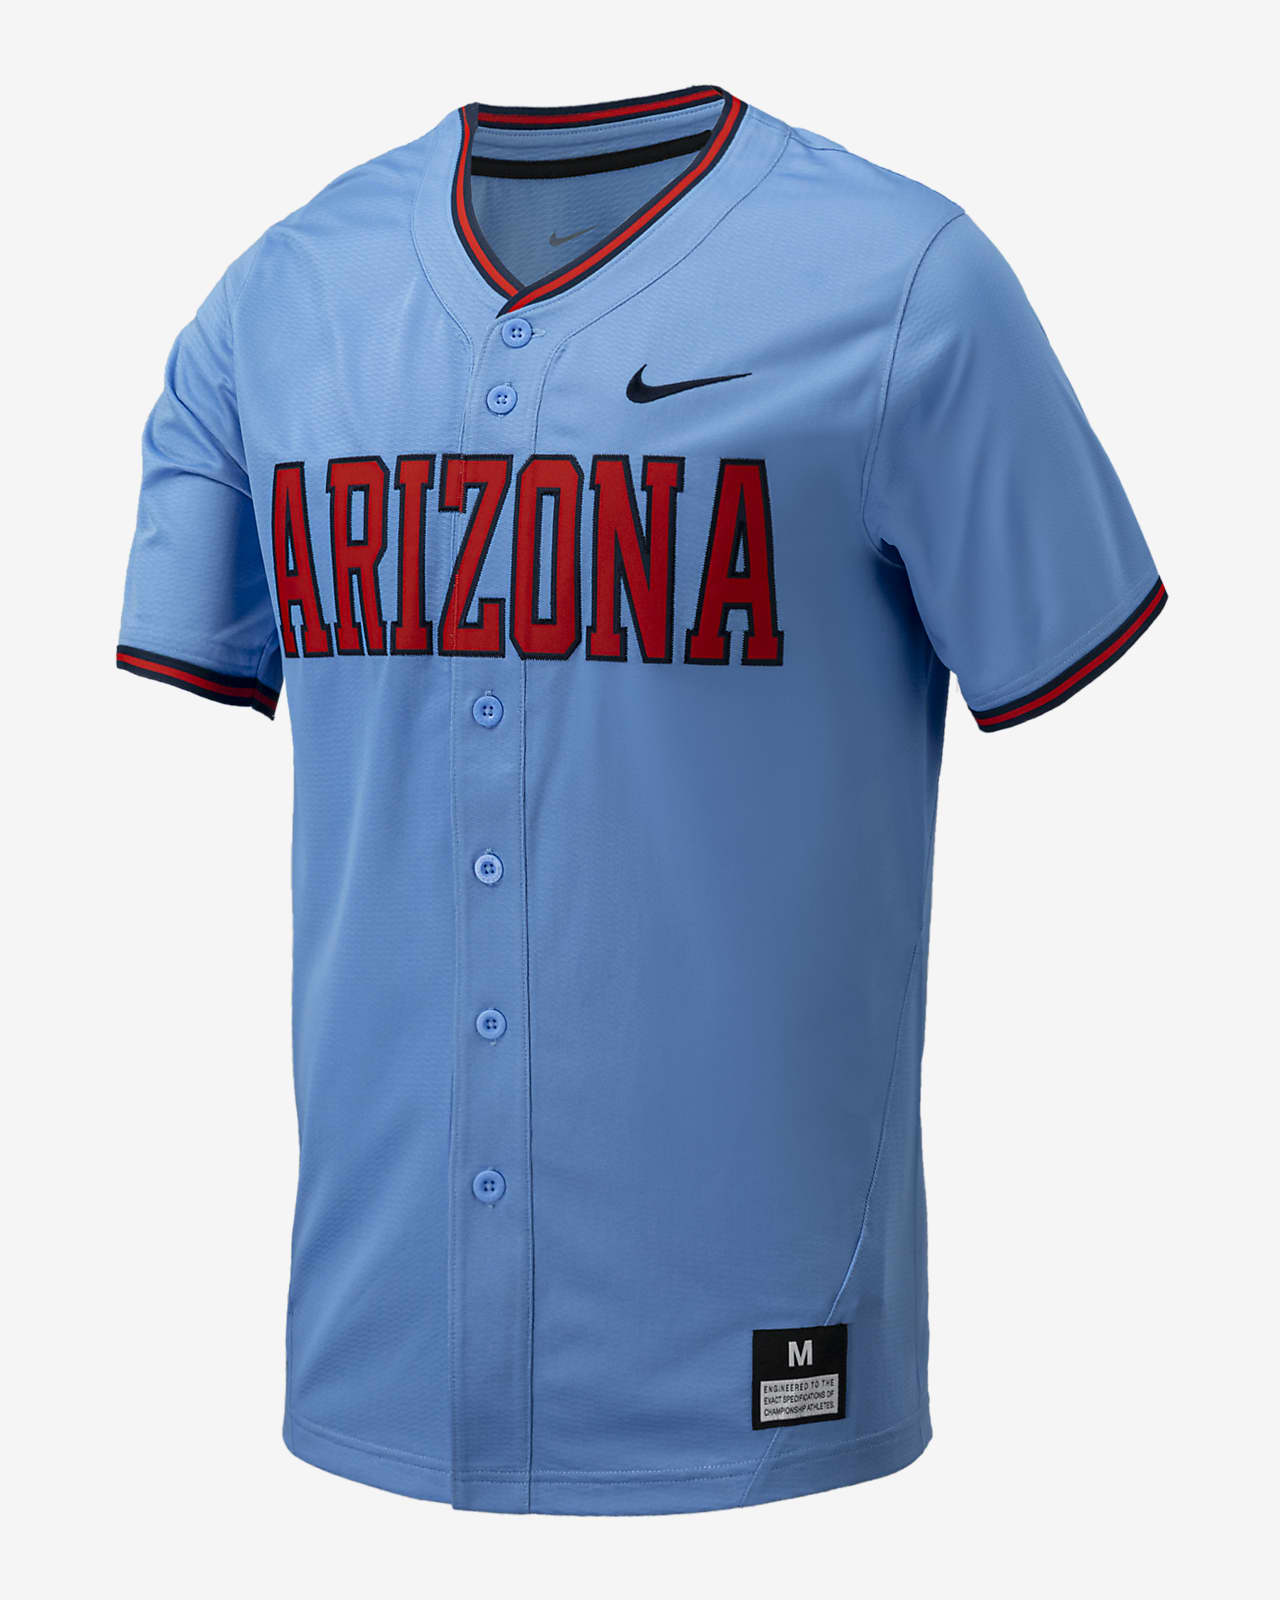 Jersey de béisbol universitario Nike Replica para hombre Arizona